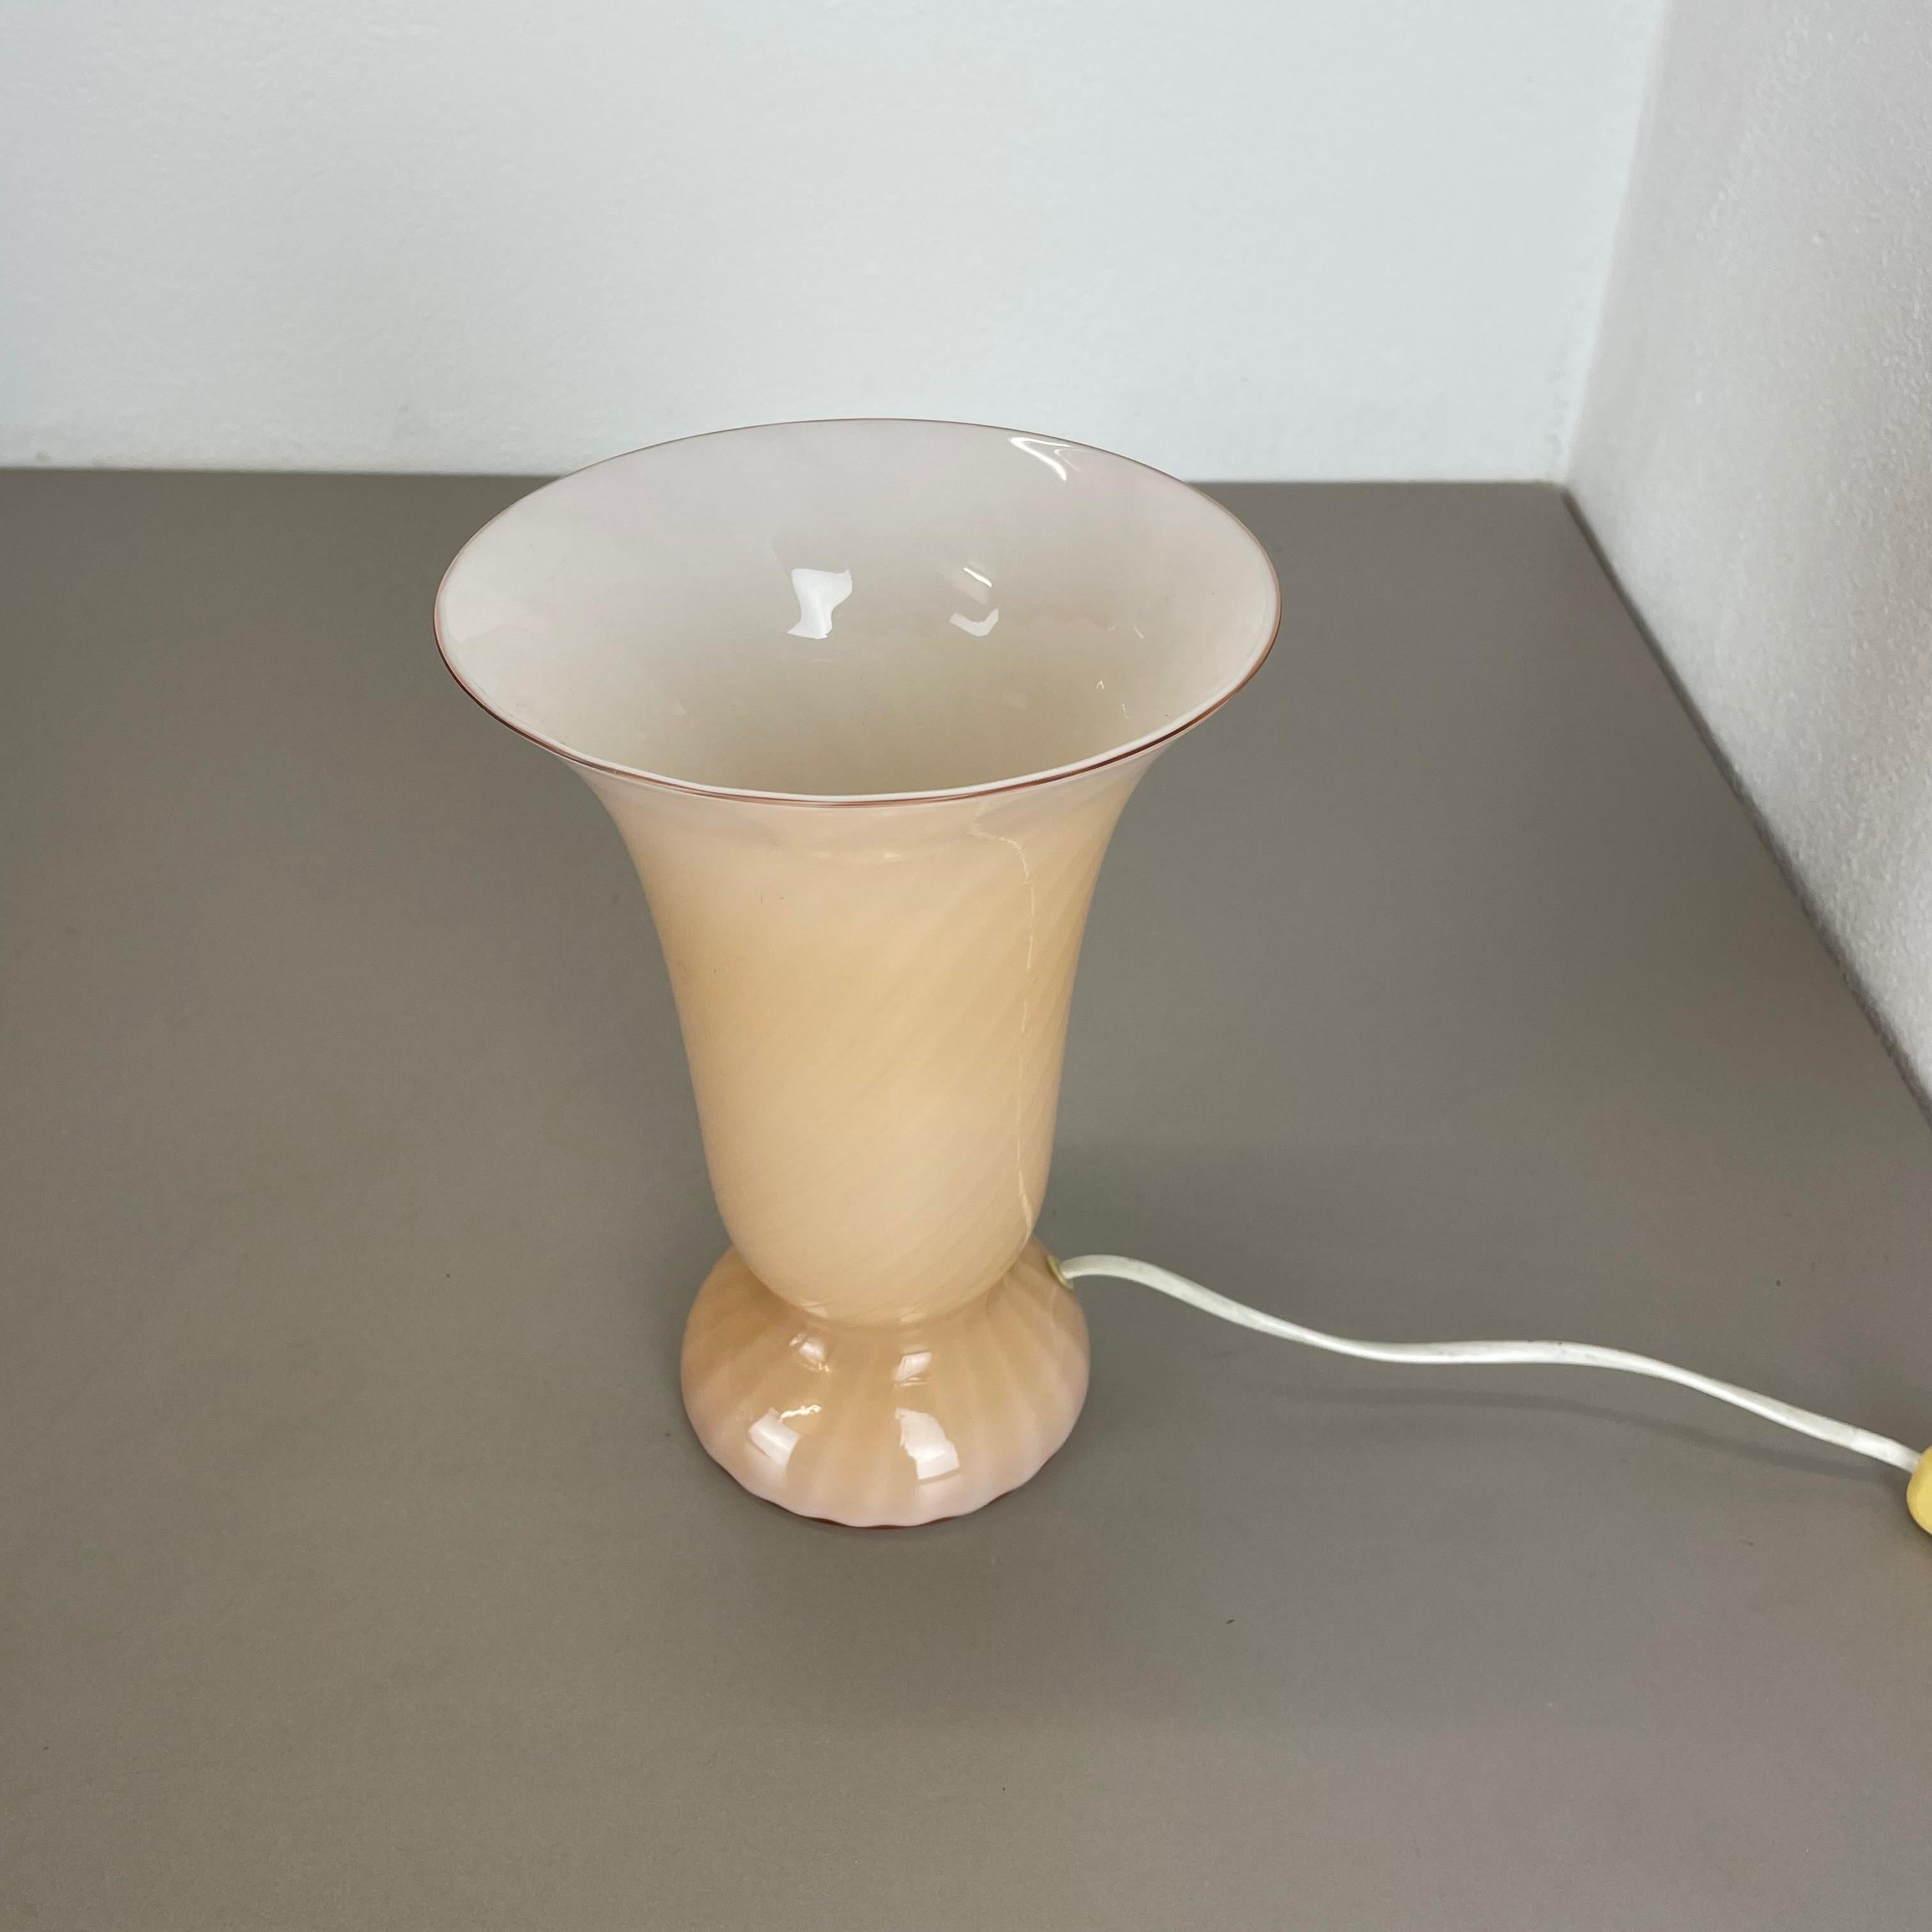 Italian Murano Swirl Rose Tone Glass Table Desktop Light by Vetri Murano, Italy, 1970s For Sale